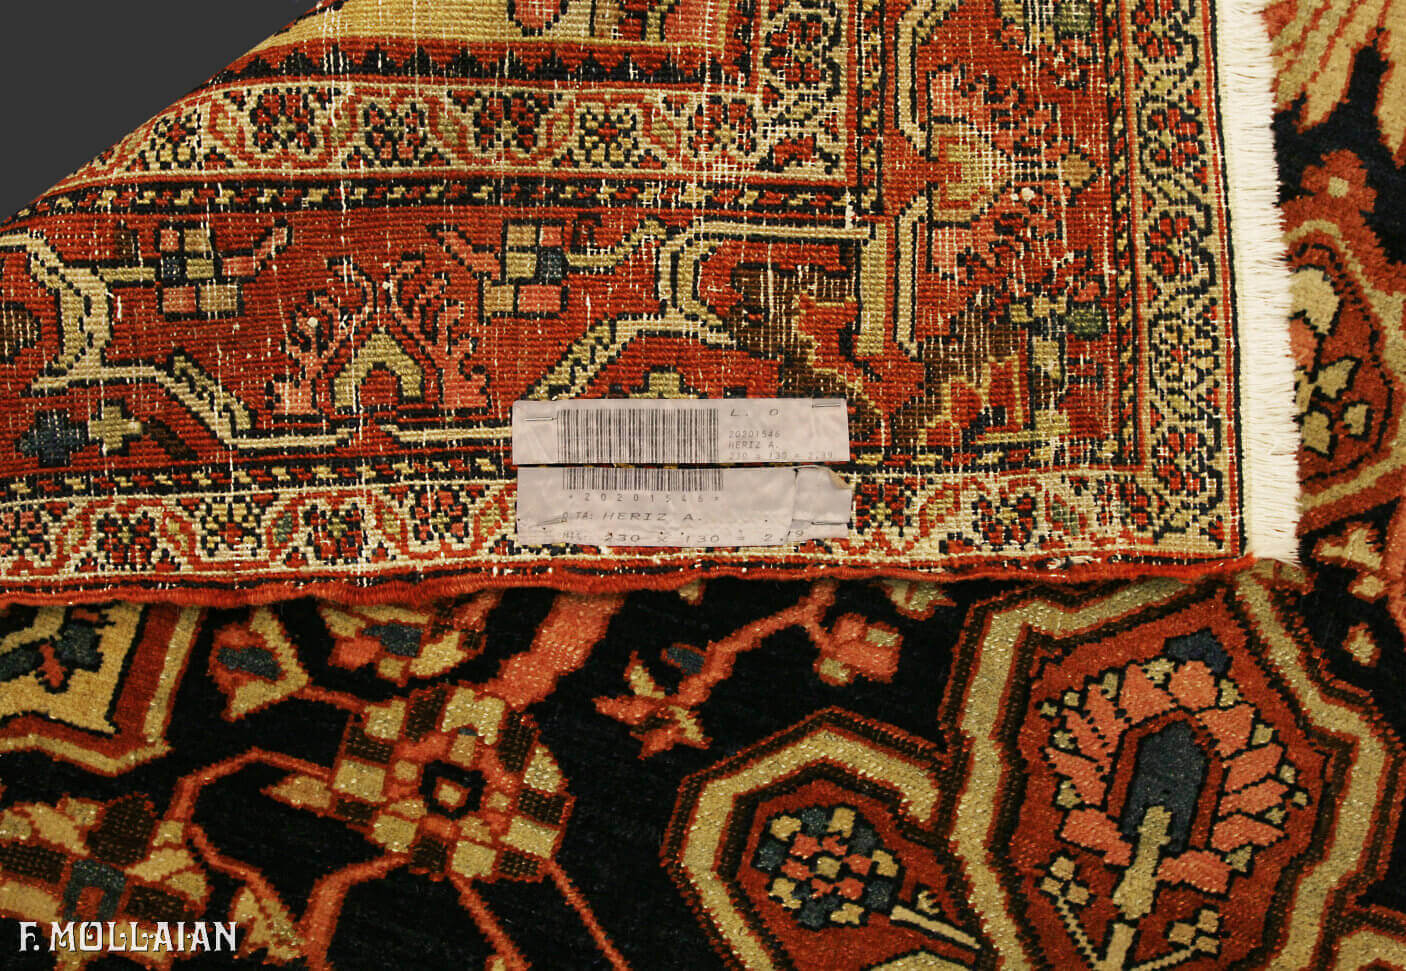 Antique Persian Heriz Rug n°:20201546